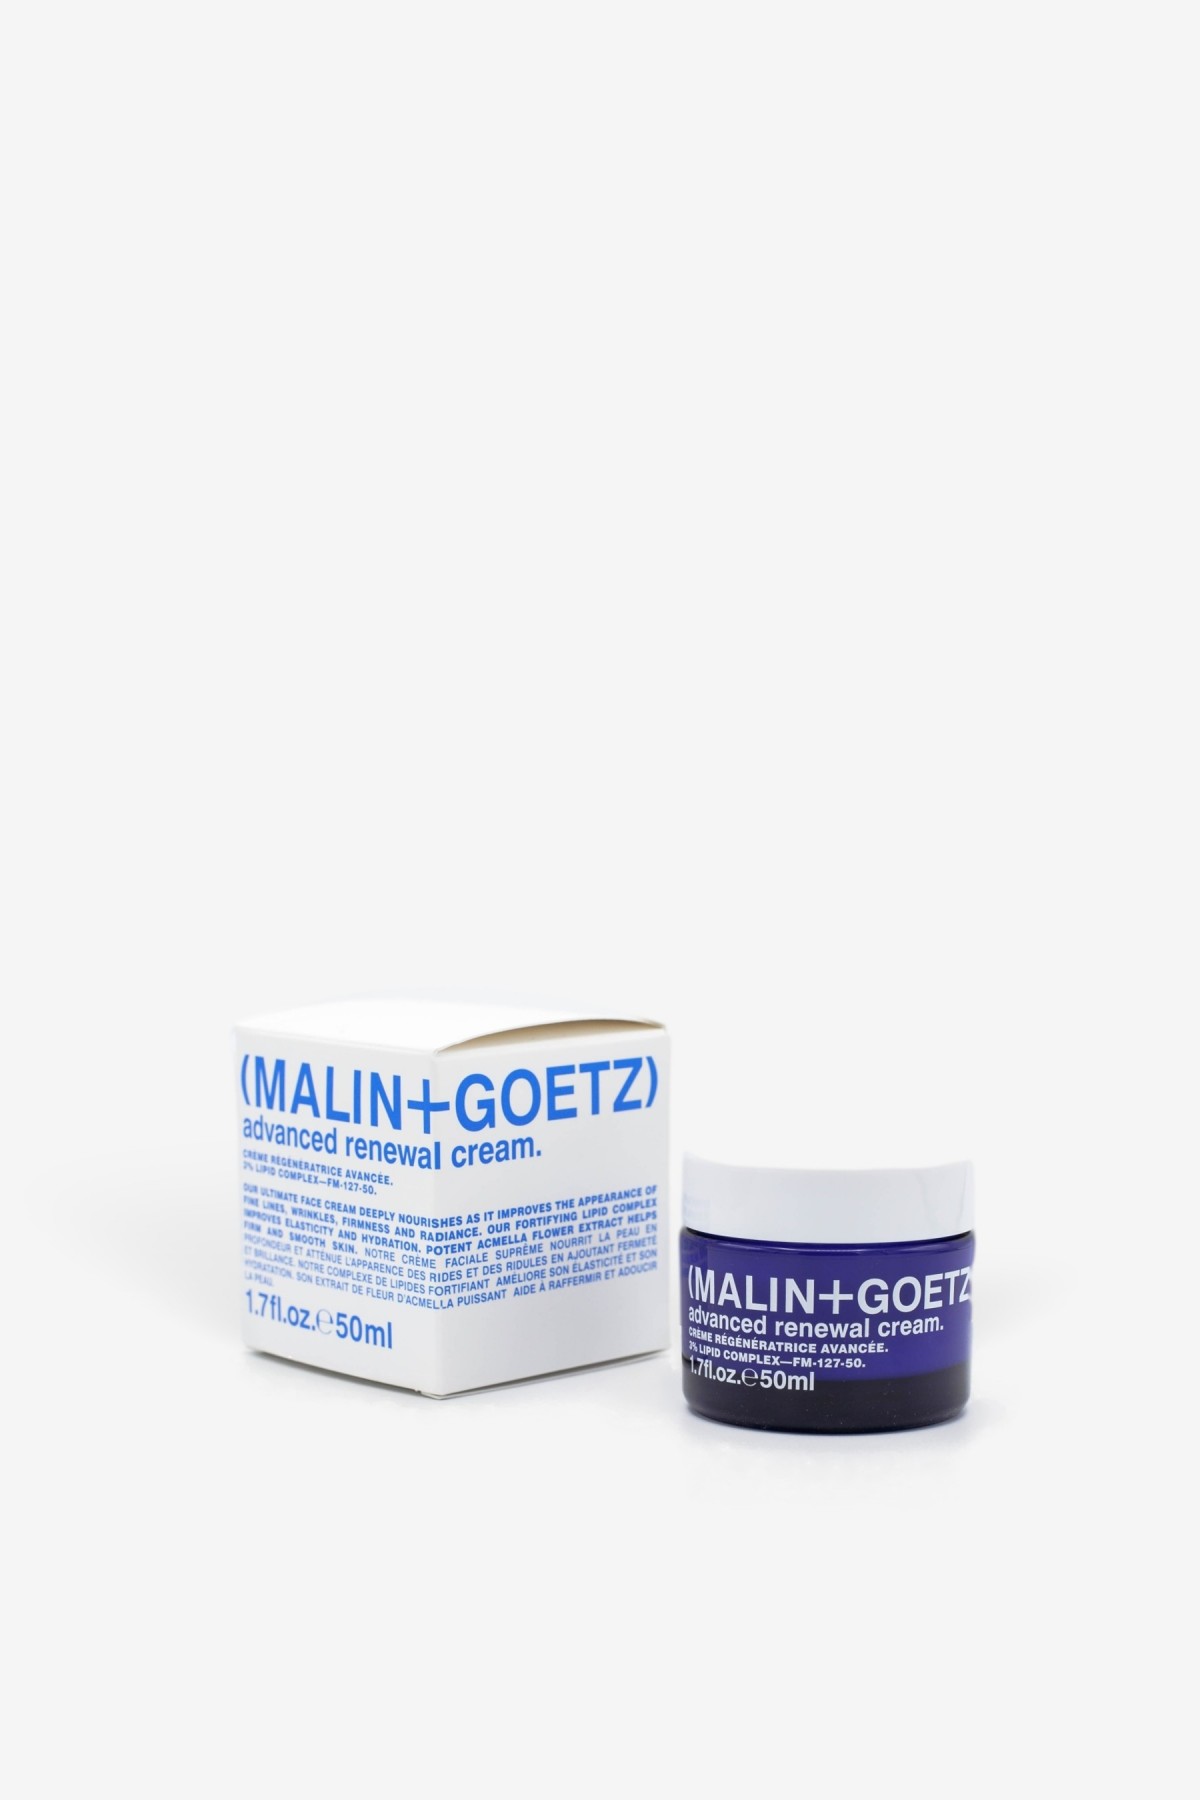 Malin+Goetz Advanced Renewal Cream 50ml in 